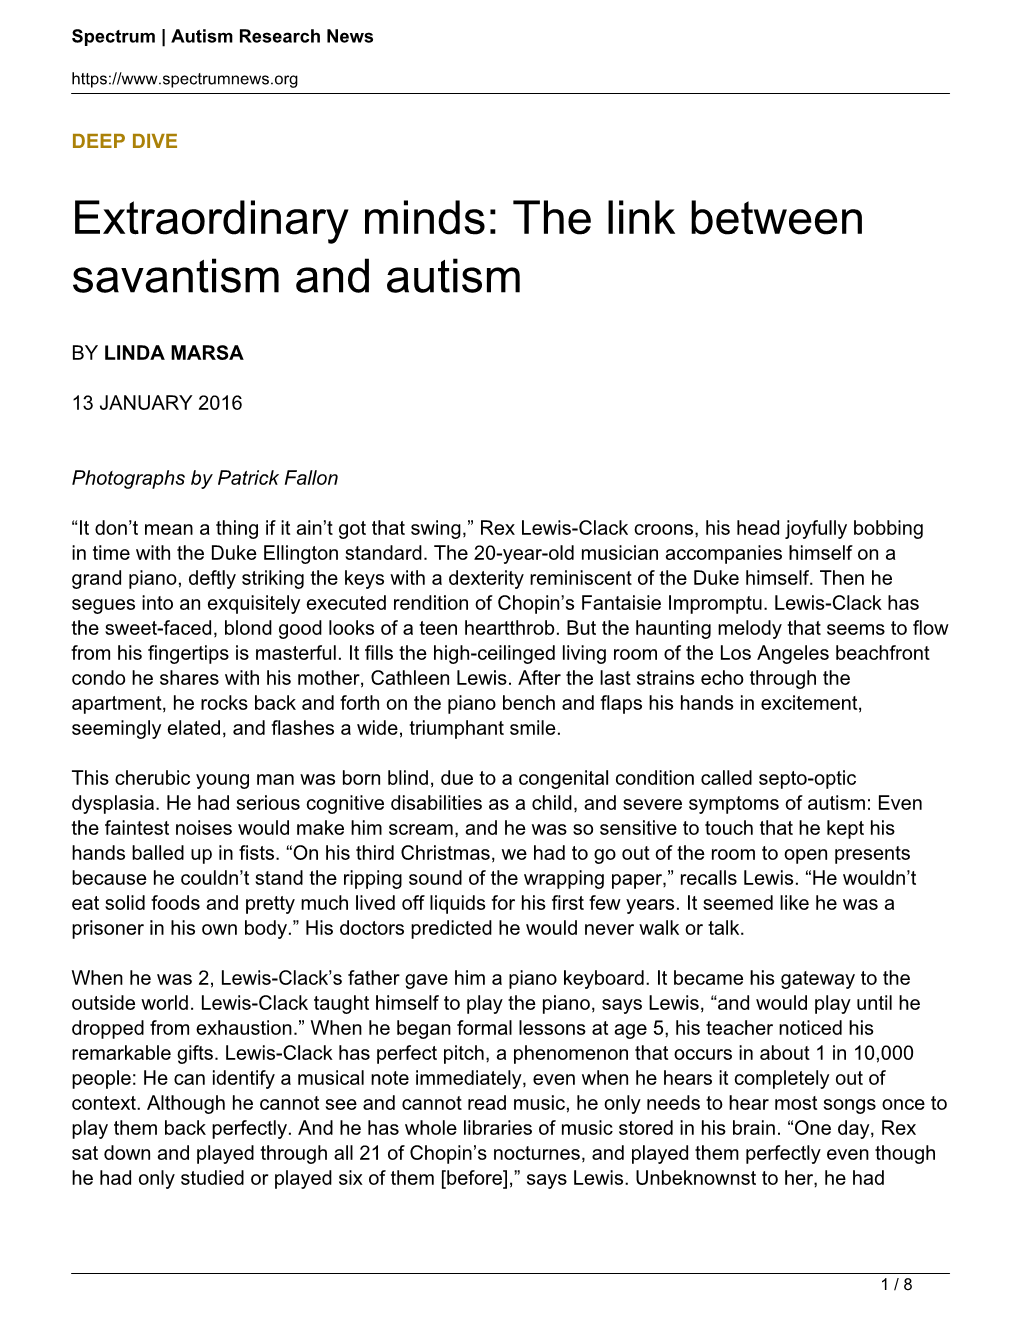 Extraordinary Minds: the Link Between Savantism and Autism